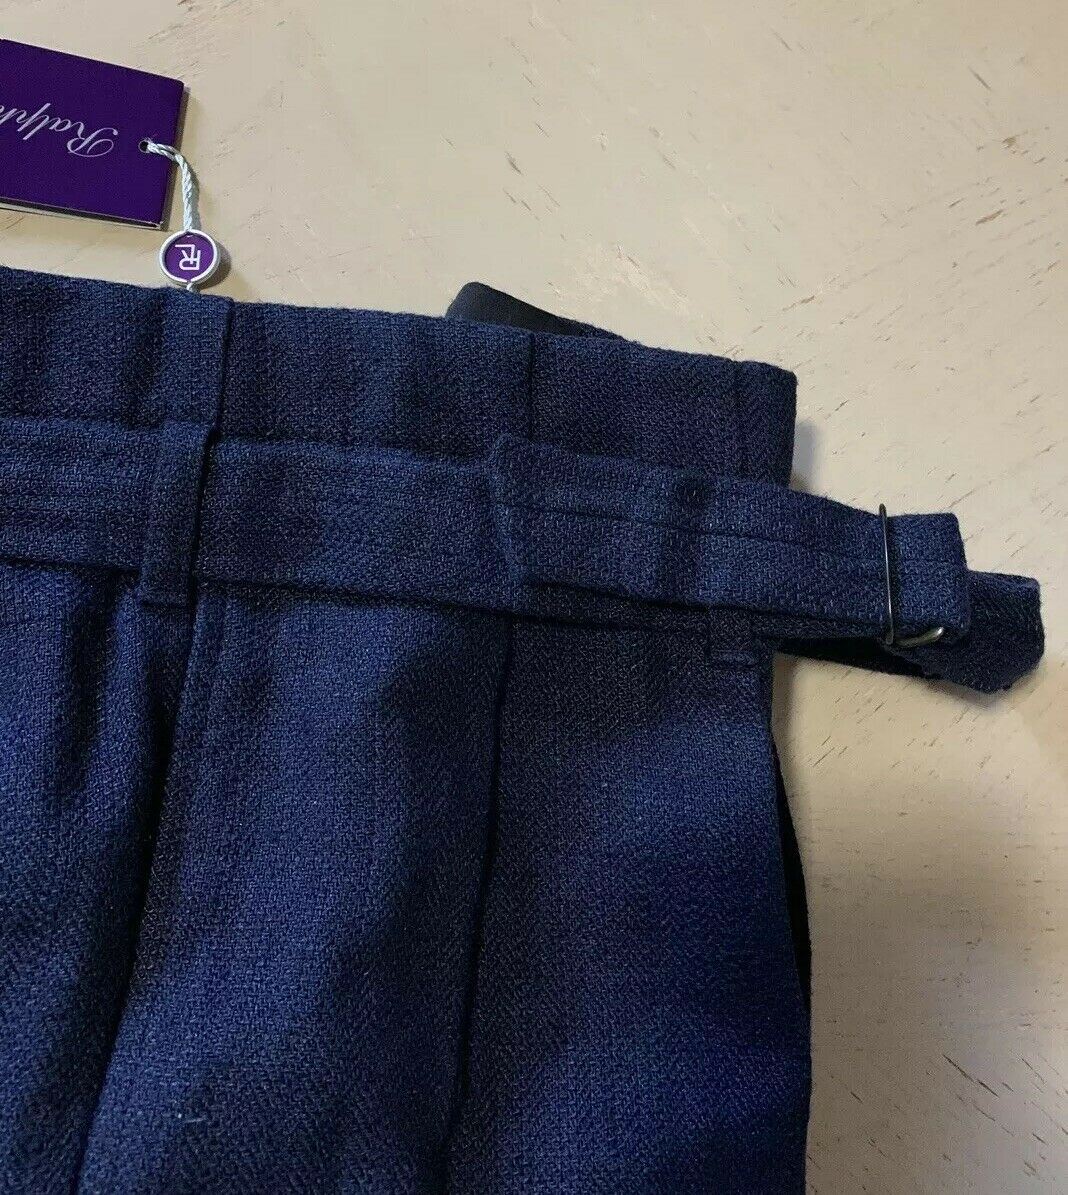 NWT $595 Ralph Lauren Purple Label Мужские льняные брюки Темно-синие 38 США (54 евро) Италия